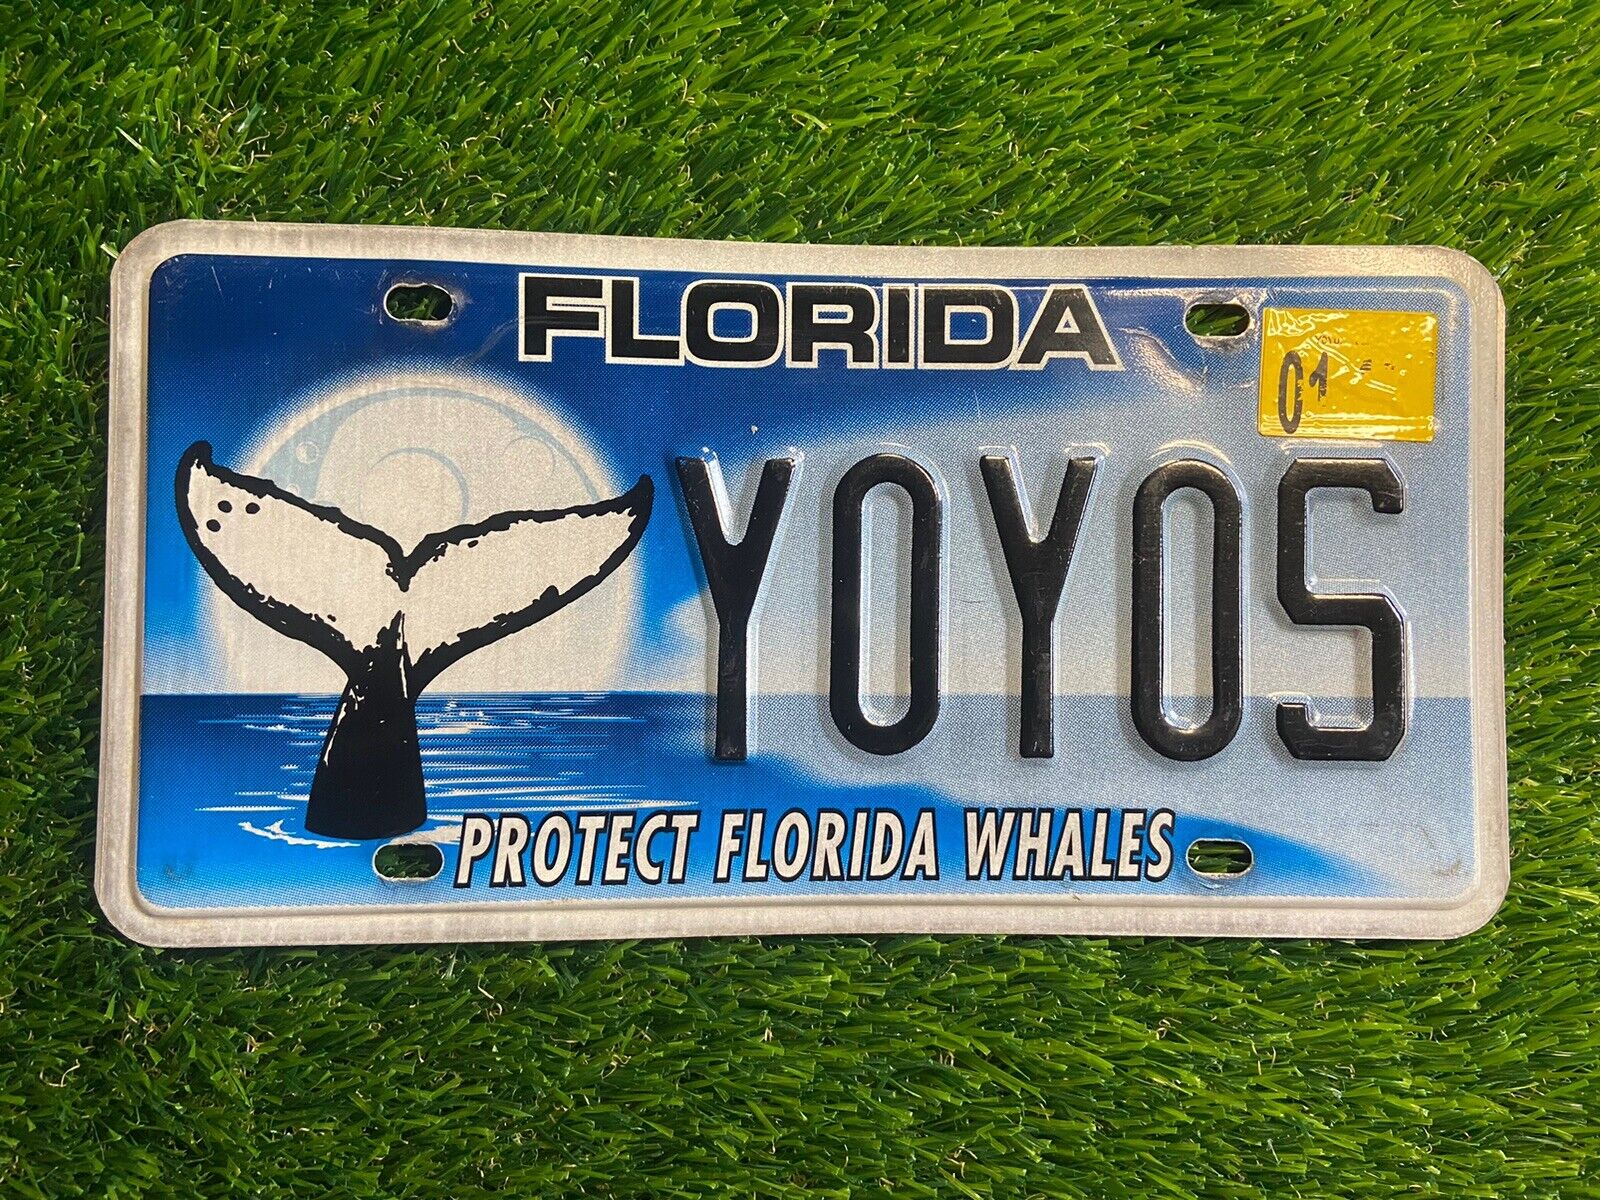 Florida Protect Florida Whales License Plate YOYOS Expired Jan 2012